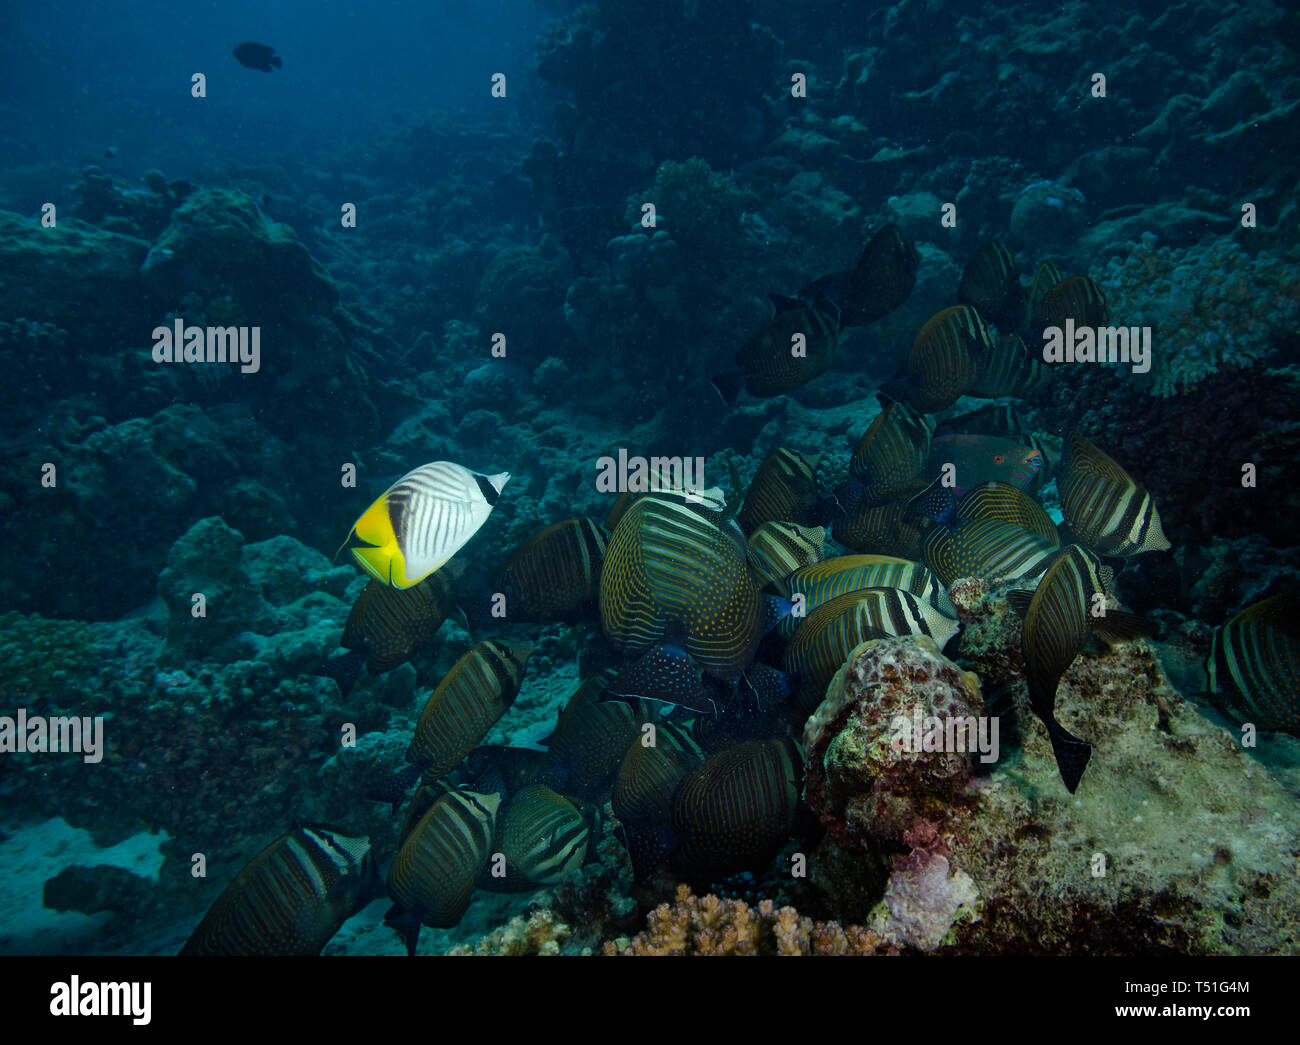 Shoal of Desjardin's sailfin tang, Zebrasoma desjardinii, feeding on coral reef, Hamata, Egypt Stock Photo